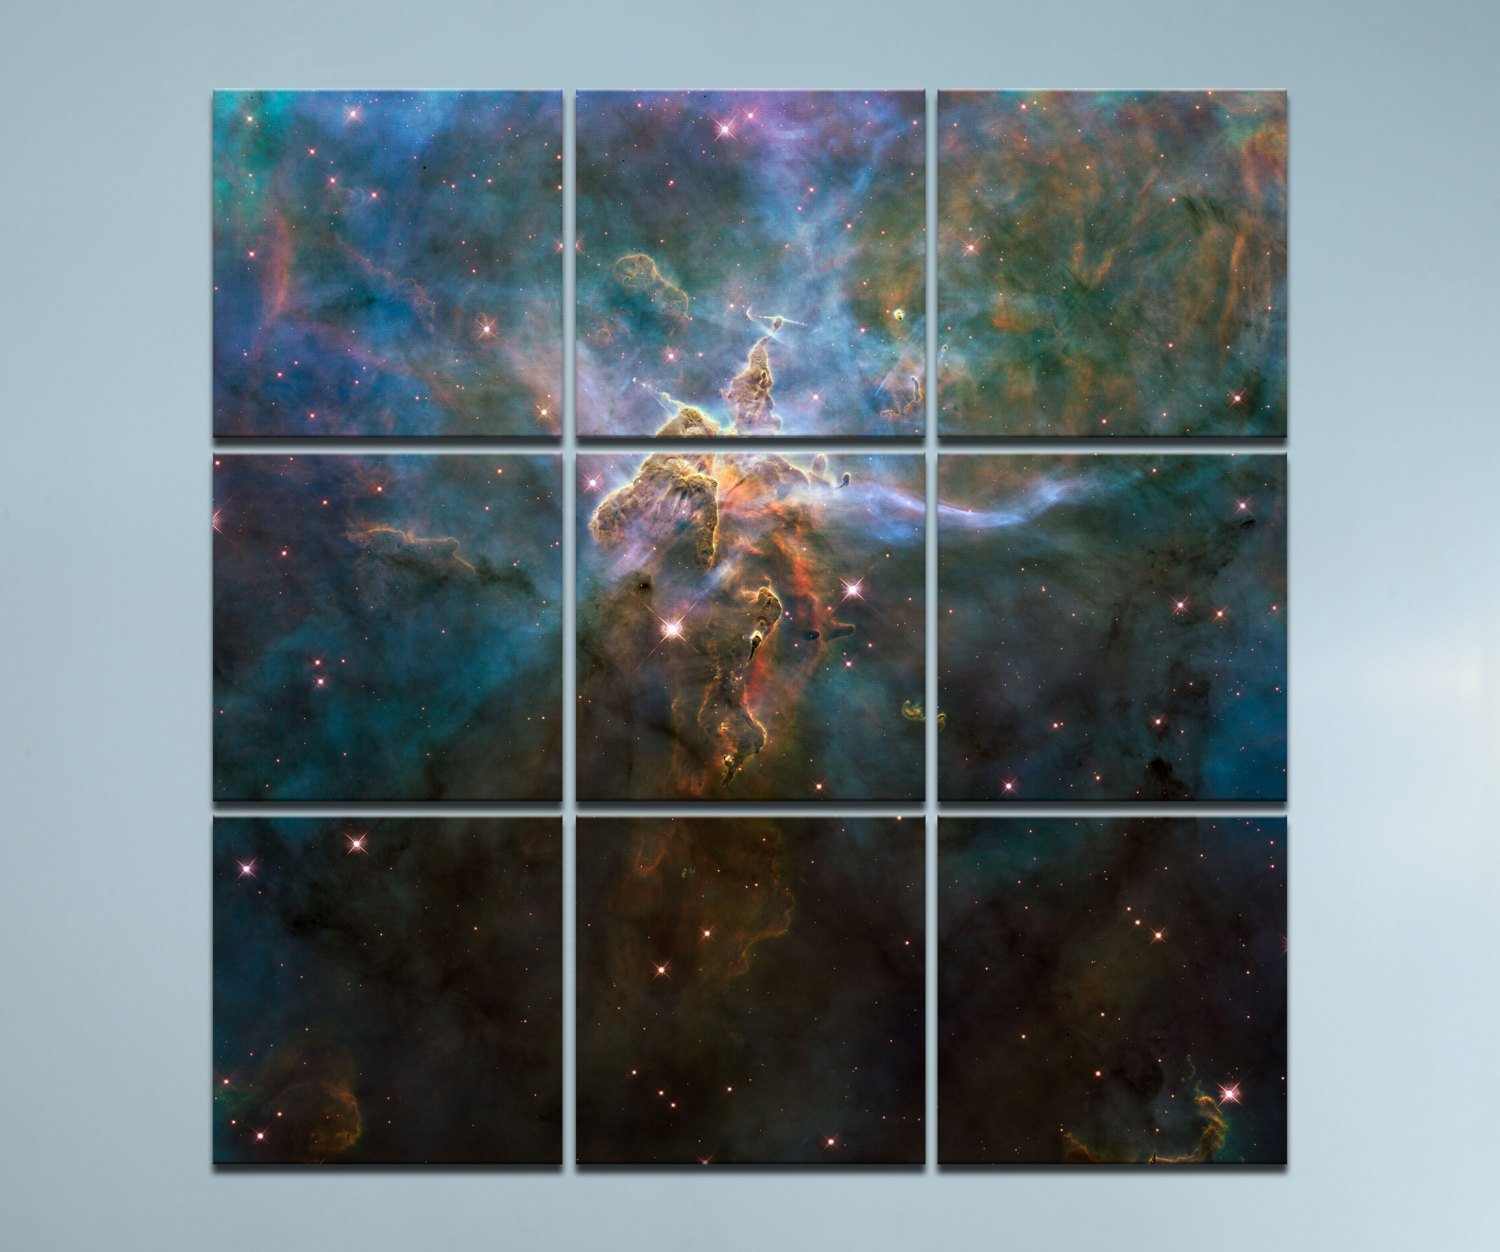 Mystic Mountain, HD Hubble Image - MASSIVE 9 Piece Canvas Wall Mural